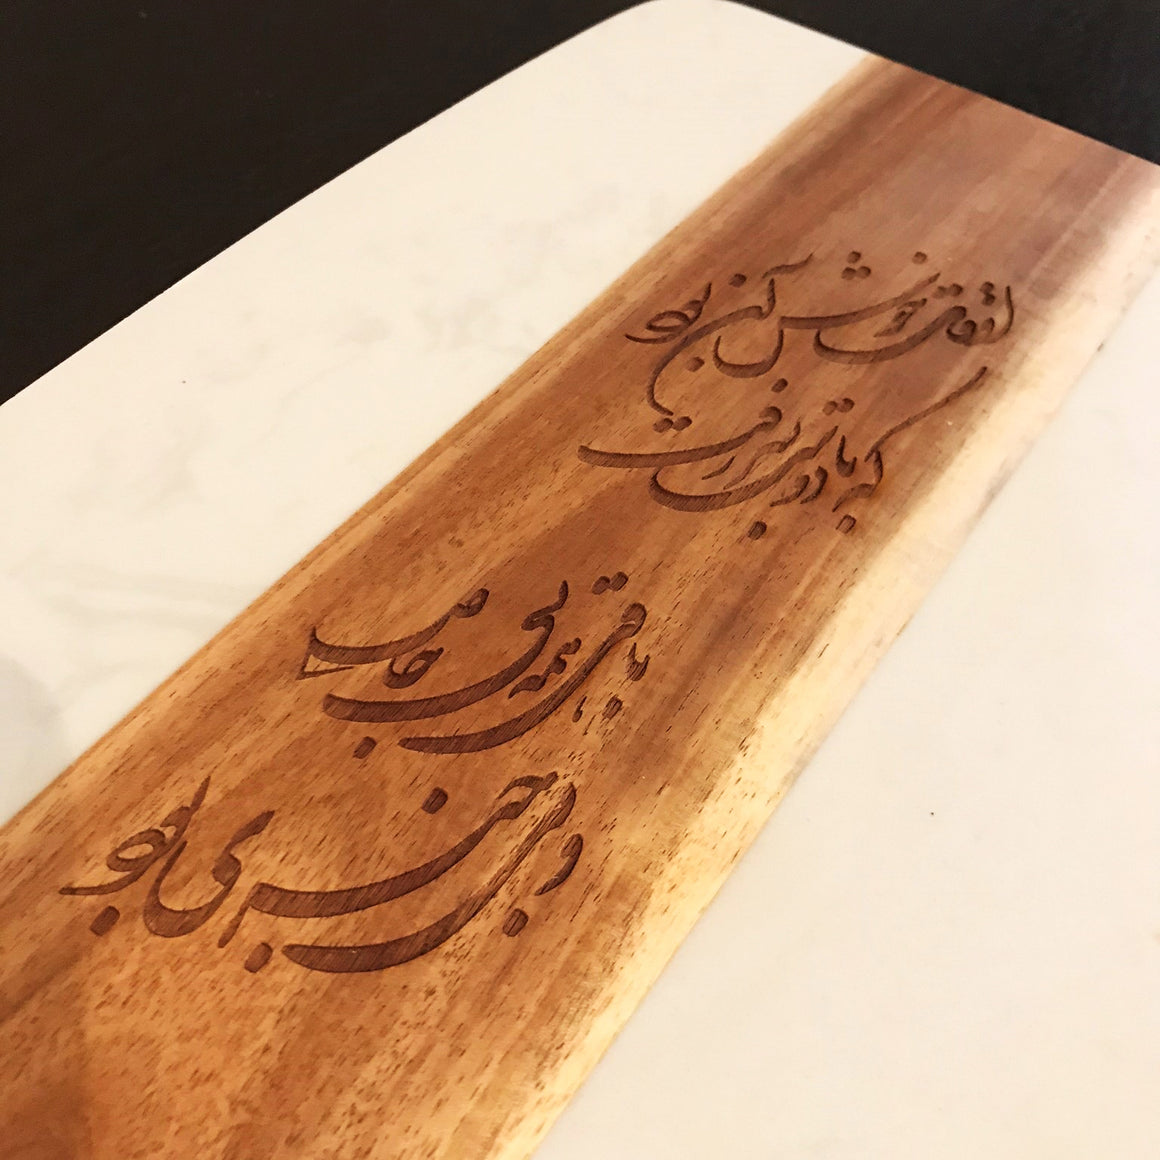 Cheese Platter- wood and white marble- Hafiz poem - Persian Calligraphy gift. شعر حافظ: اوقات خوش آن بود که با دوست به سر رفت